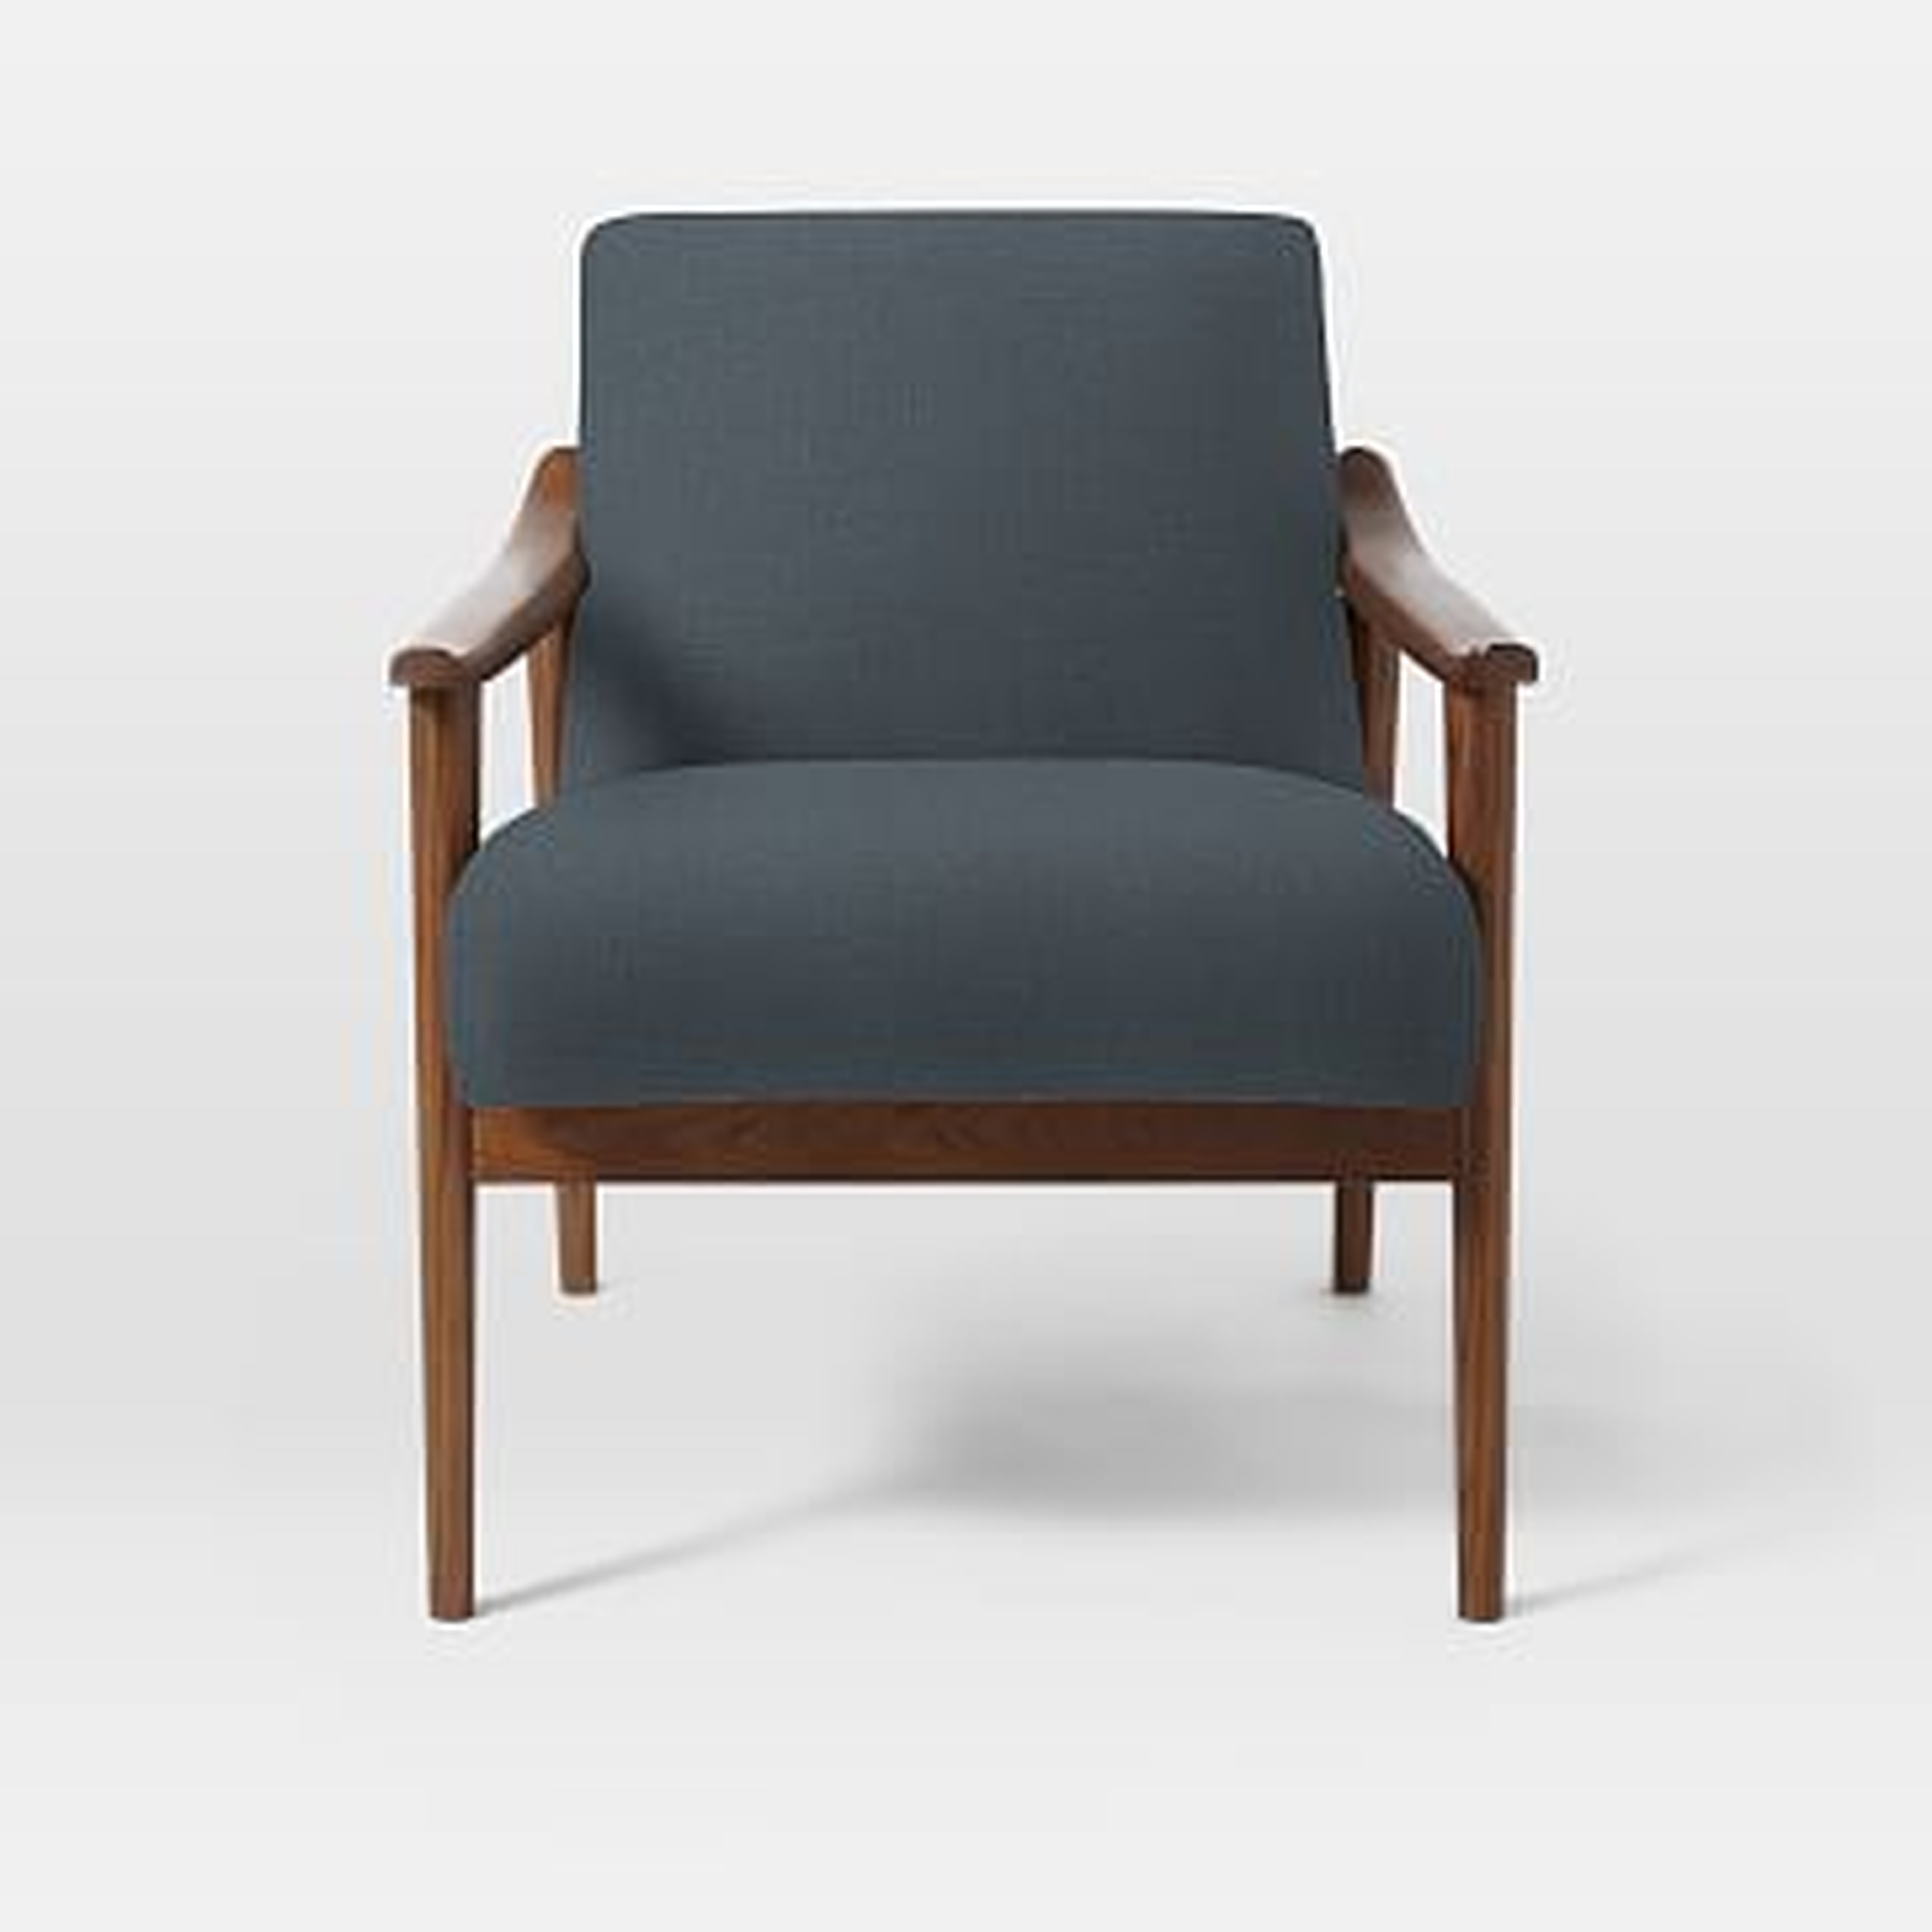 Mid-Century Show Wood Upholstered Chair, Linen Weave, Regal Blue - West Elm